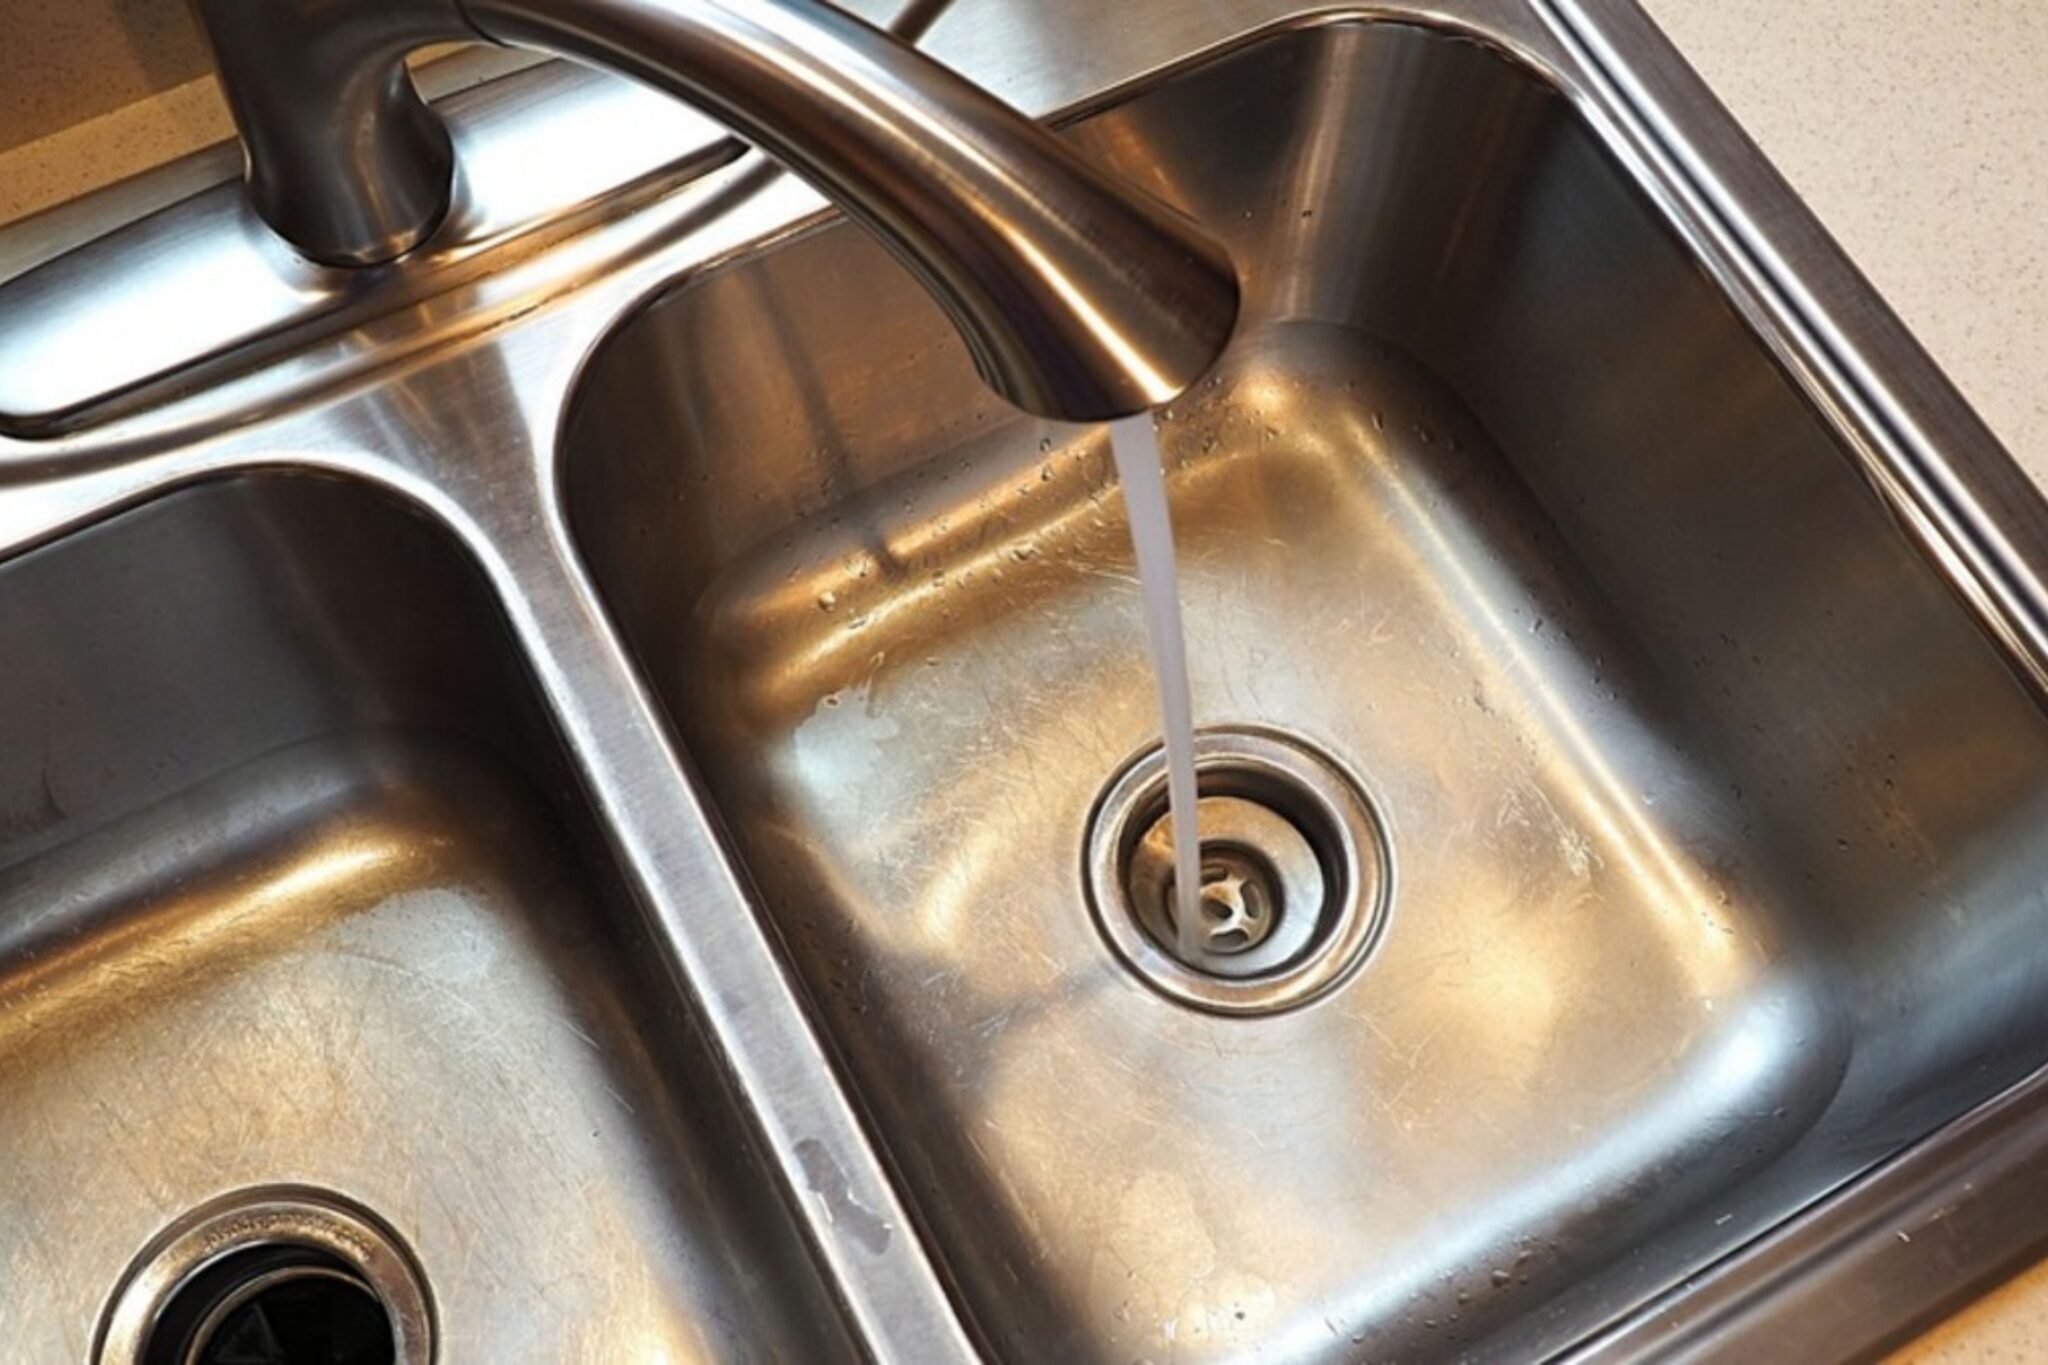 kitchen sink with garbage disposal won't drain